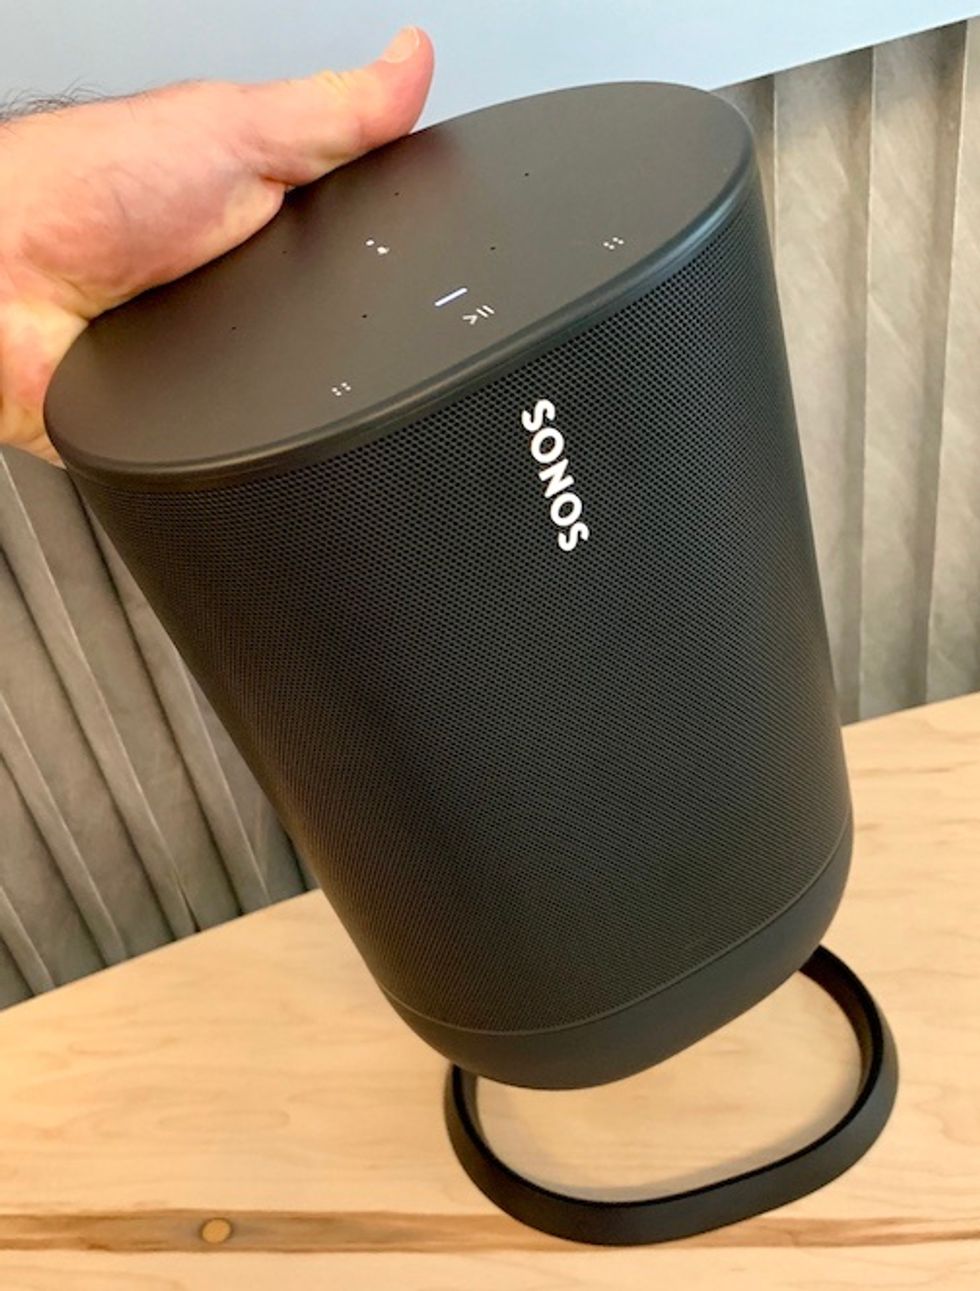 A Sonos portable, tall, black speaker